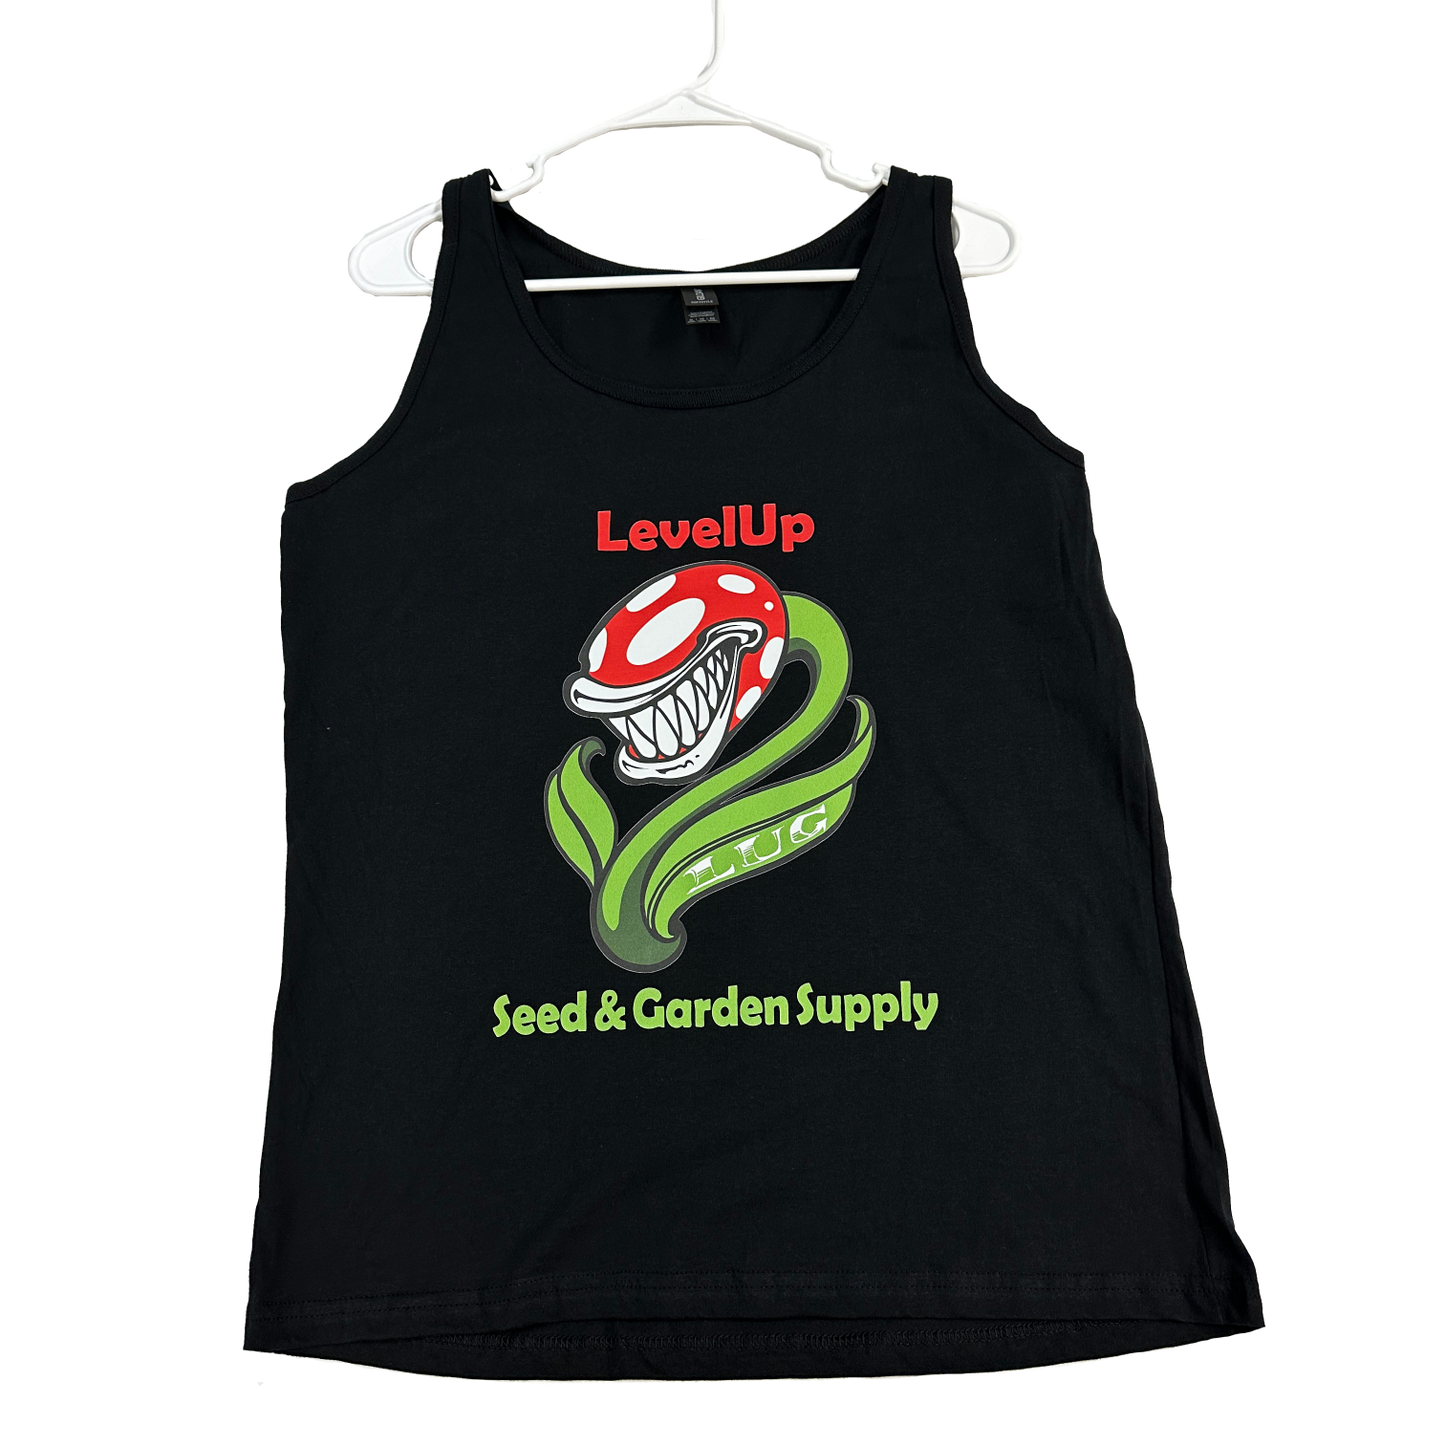 LevelUp Tank Top Shirt (Black)